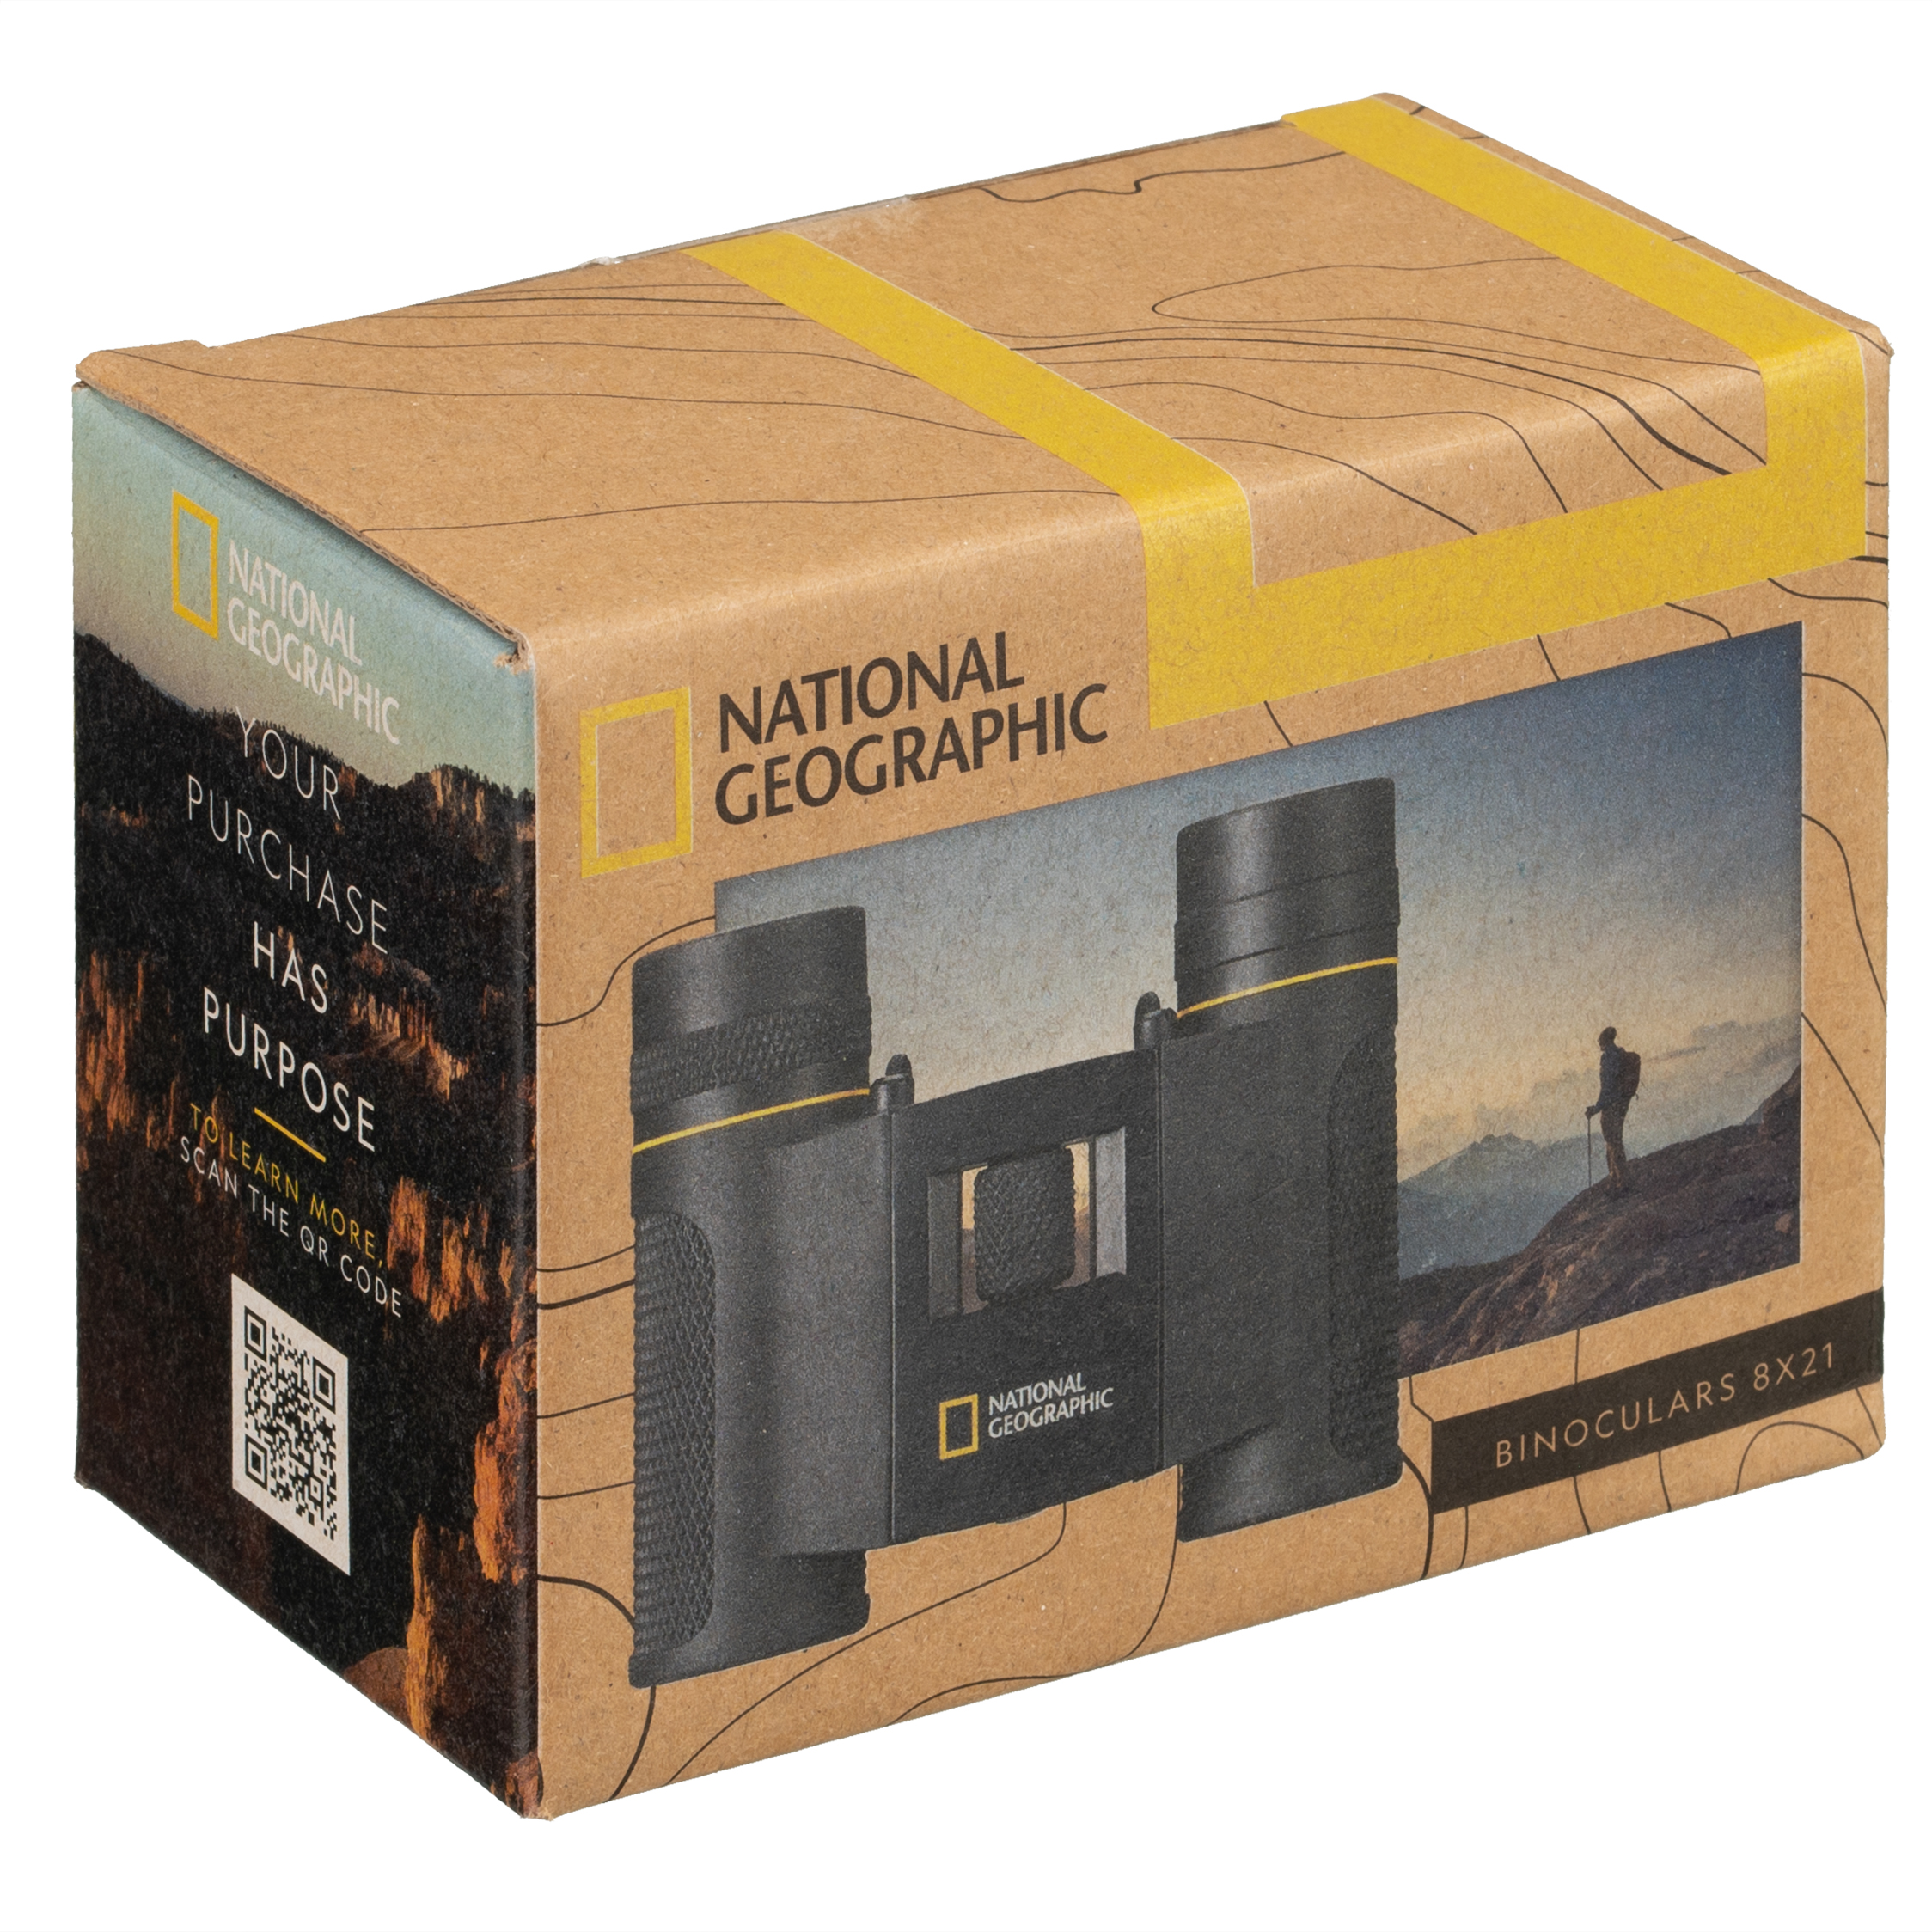 NATIONAL GEOGRAPHIC 8x21 pocket binoculars